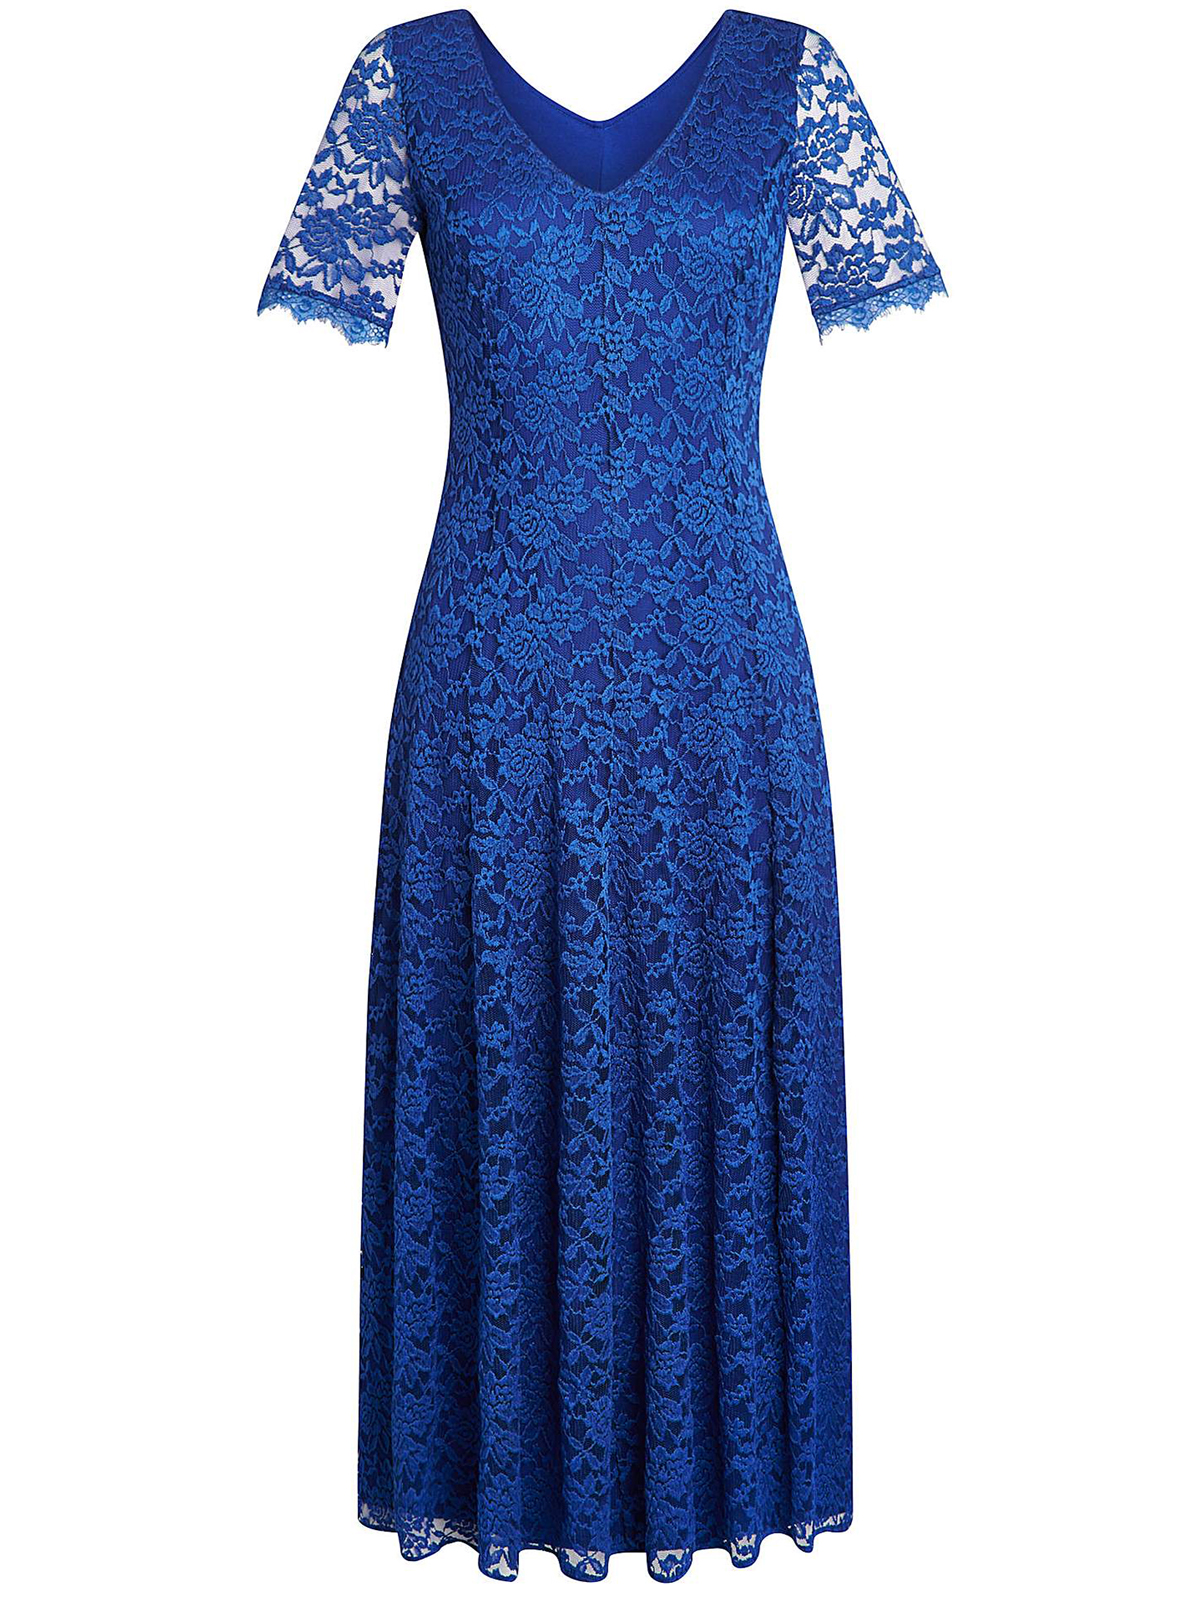 Joanna Hope - - Joanna Hope COBALT-BLUE Floral Lace Maxi Dress - Size 10 to  32